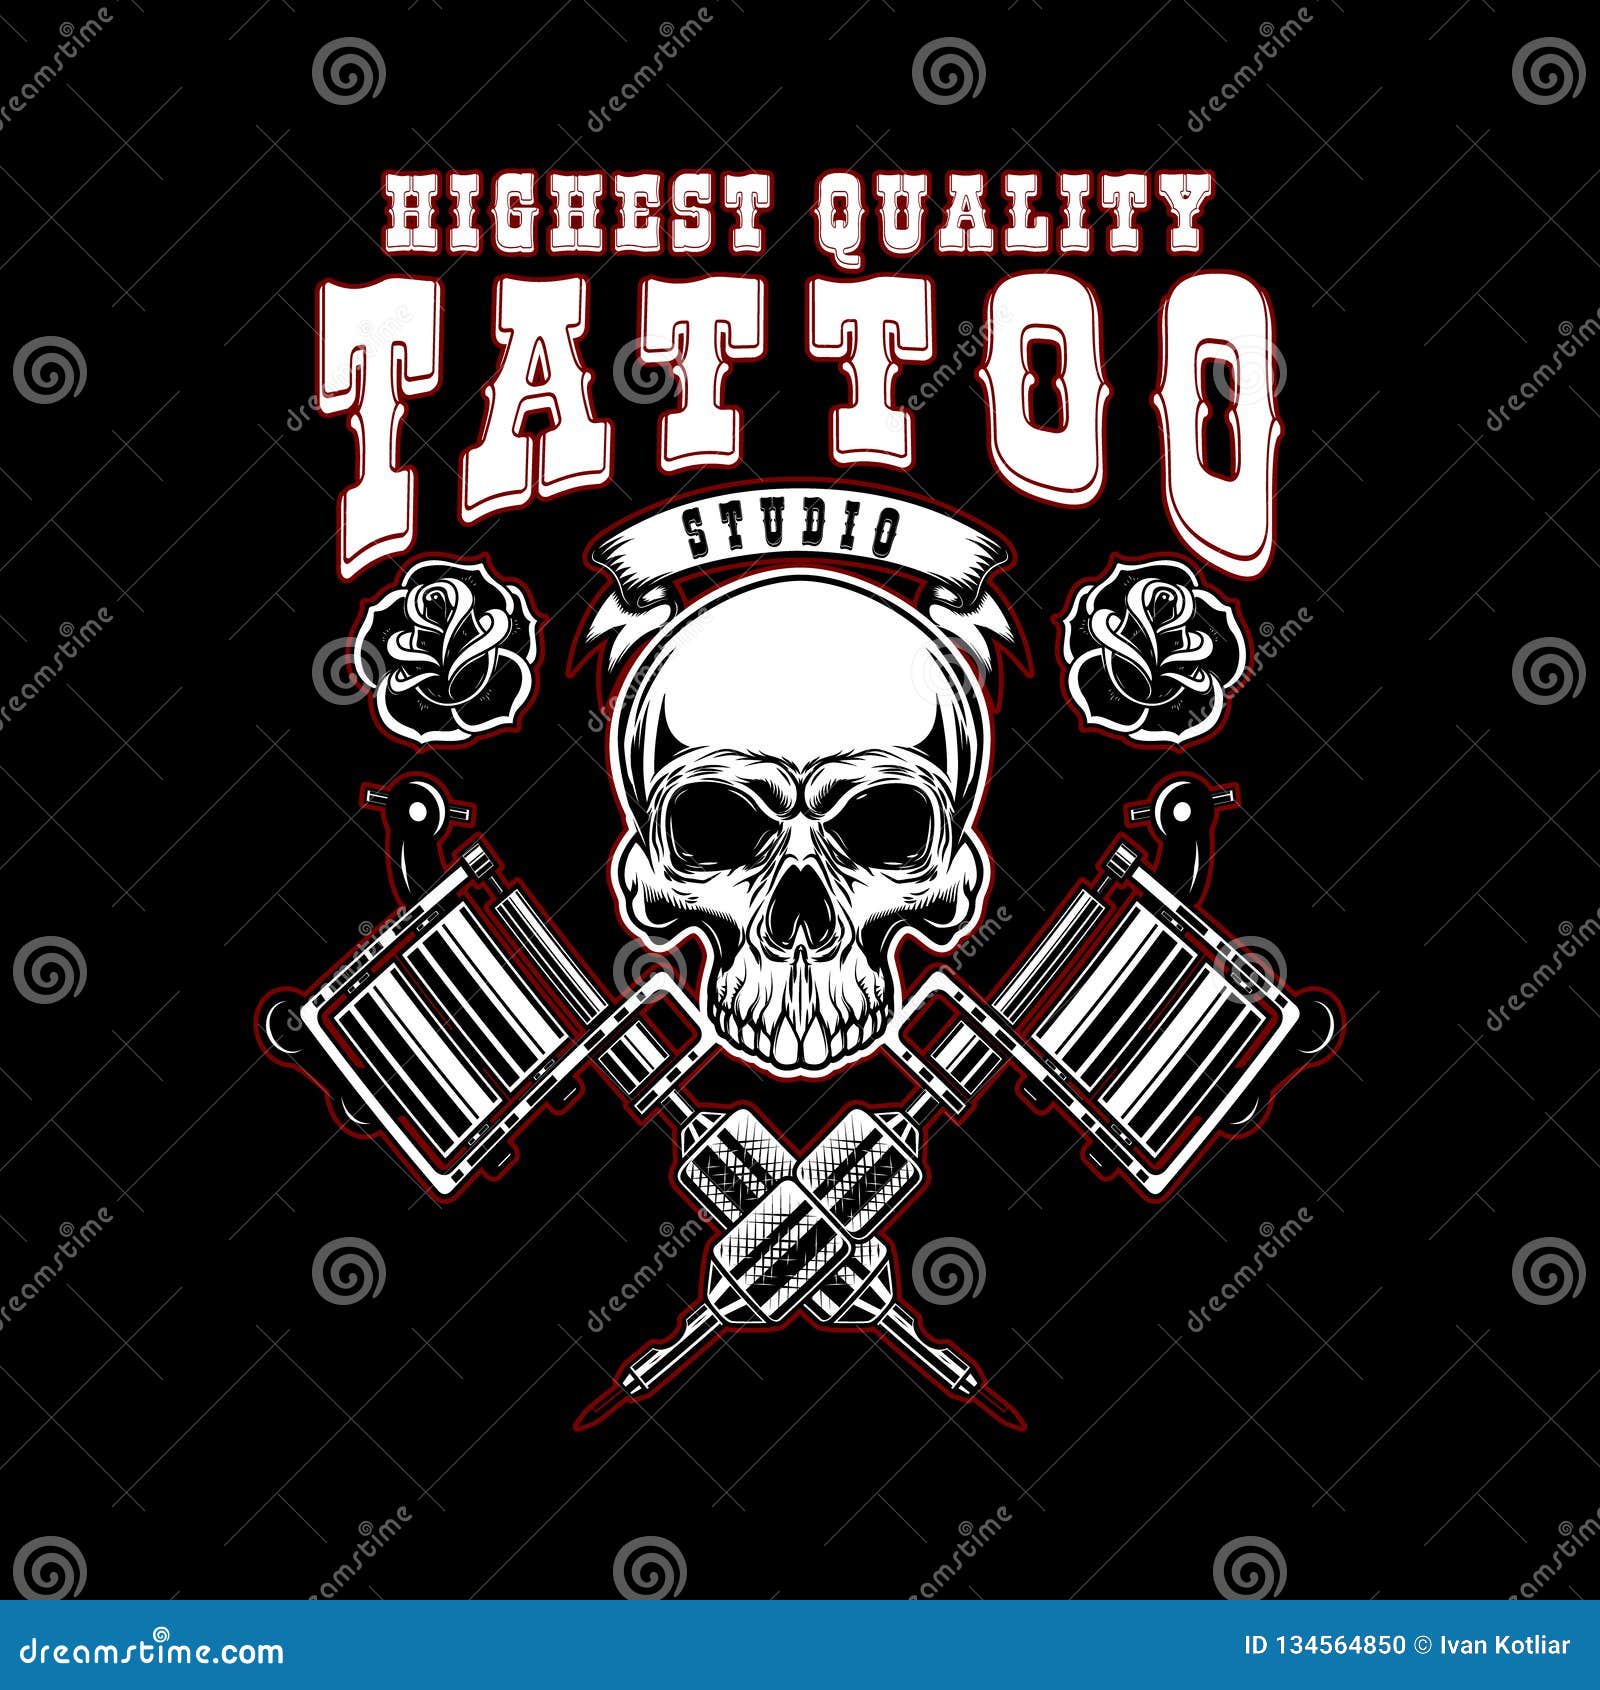 Painter Skull Tattoo Logo by hassified on DeviantArt